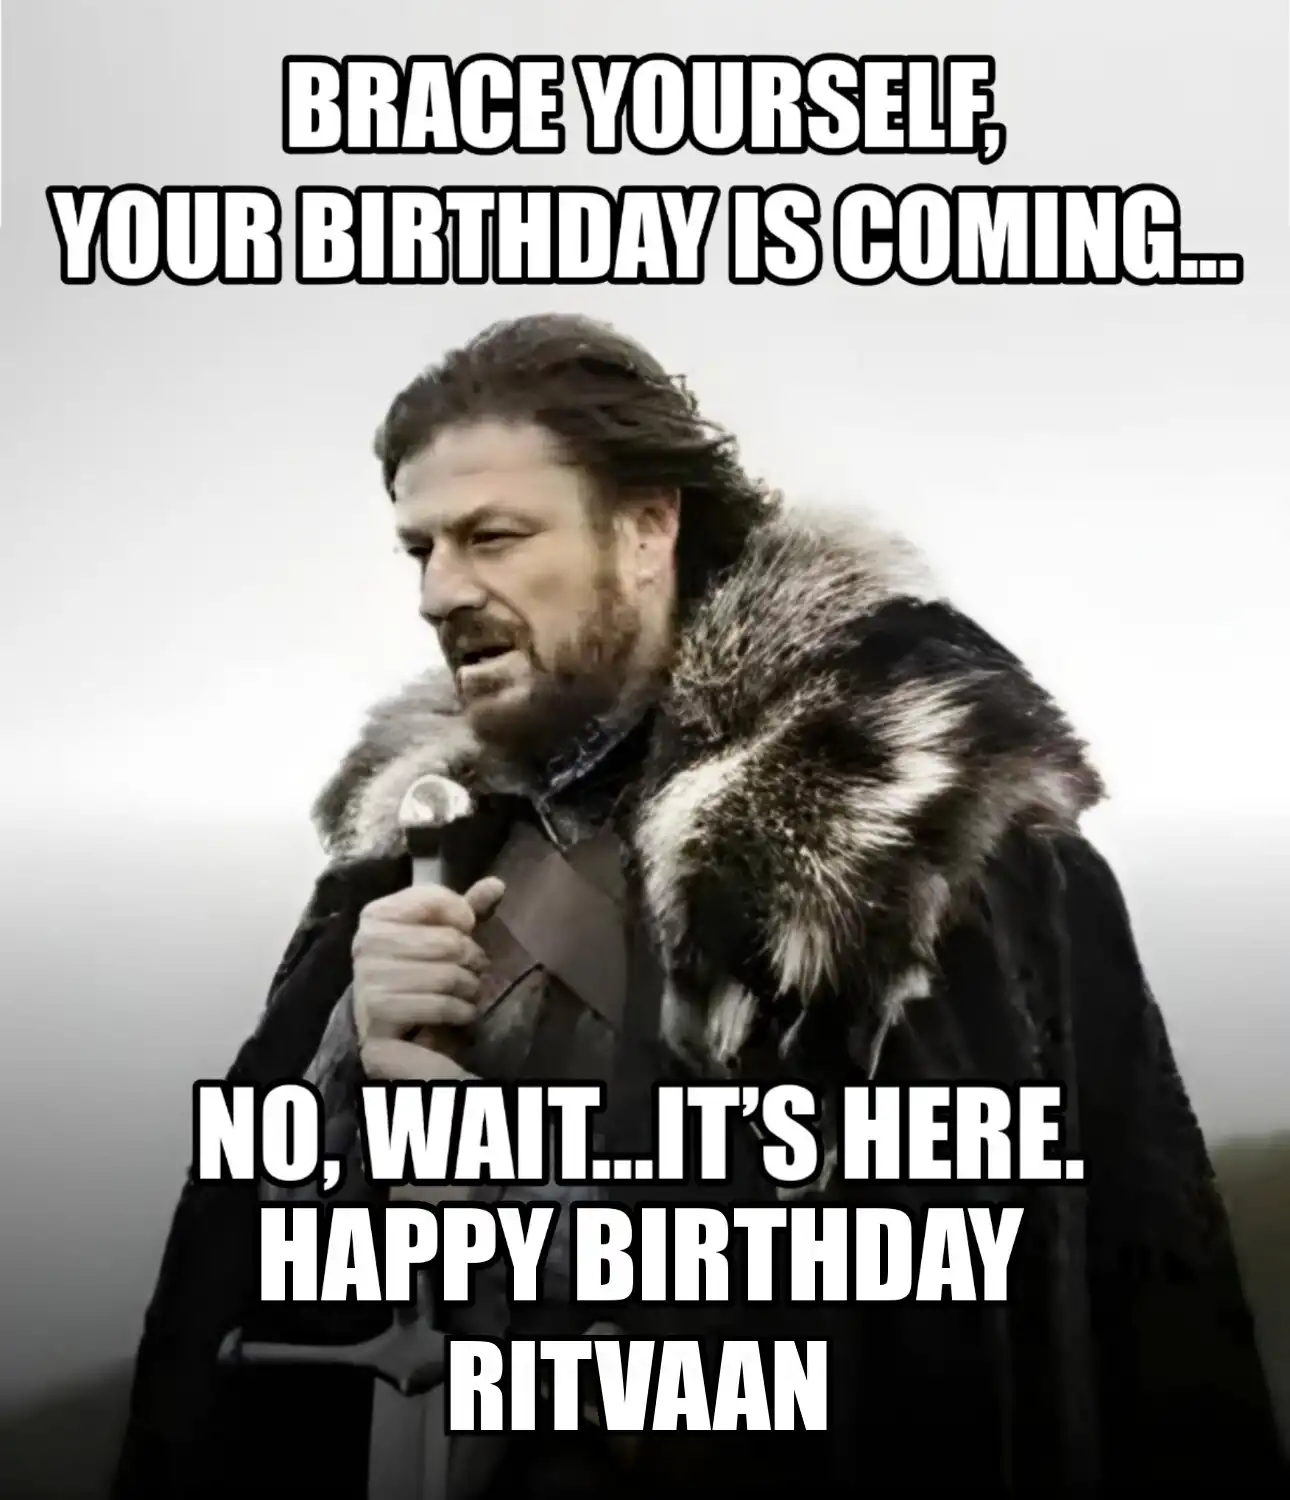 Happy Birthday Ritvaan Brace Yourself Your Birthday Is Coming Meme